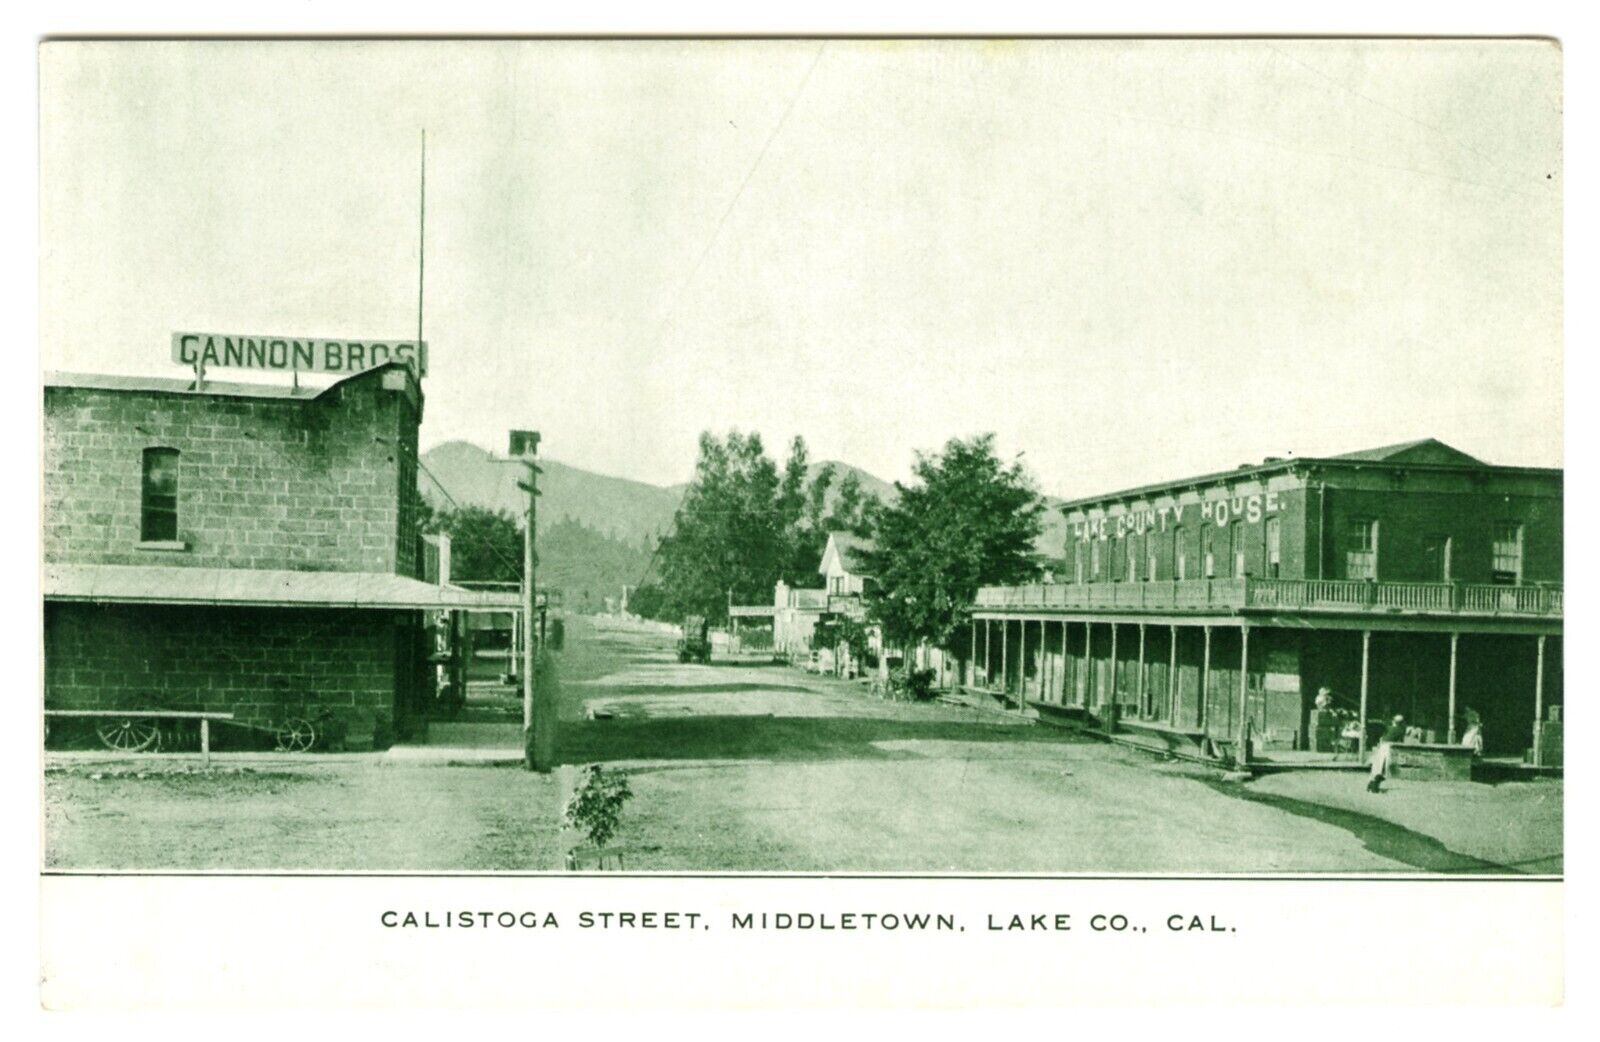 1910s CALISTOGA STREET MIDDLETON CA LAKE CO. HOUSE,GANNON BROS.~UNUSED POSTCARD